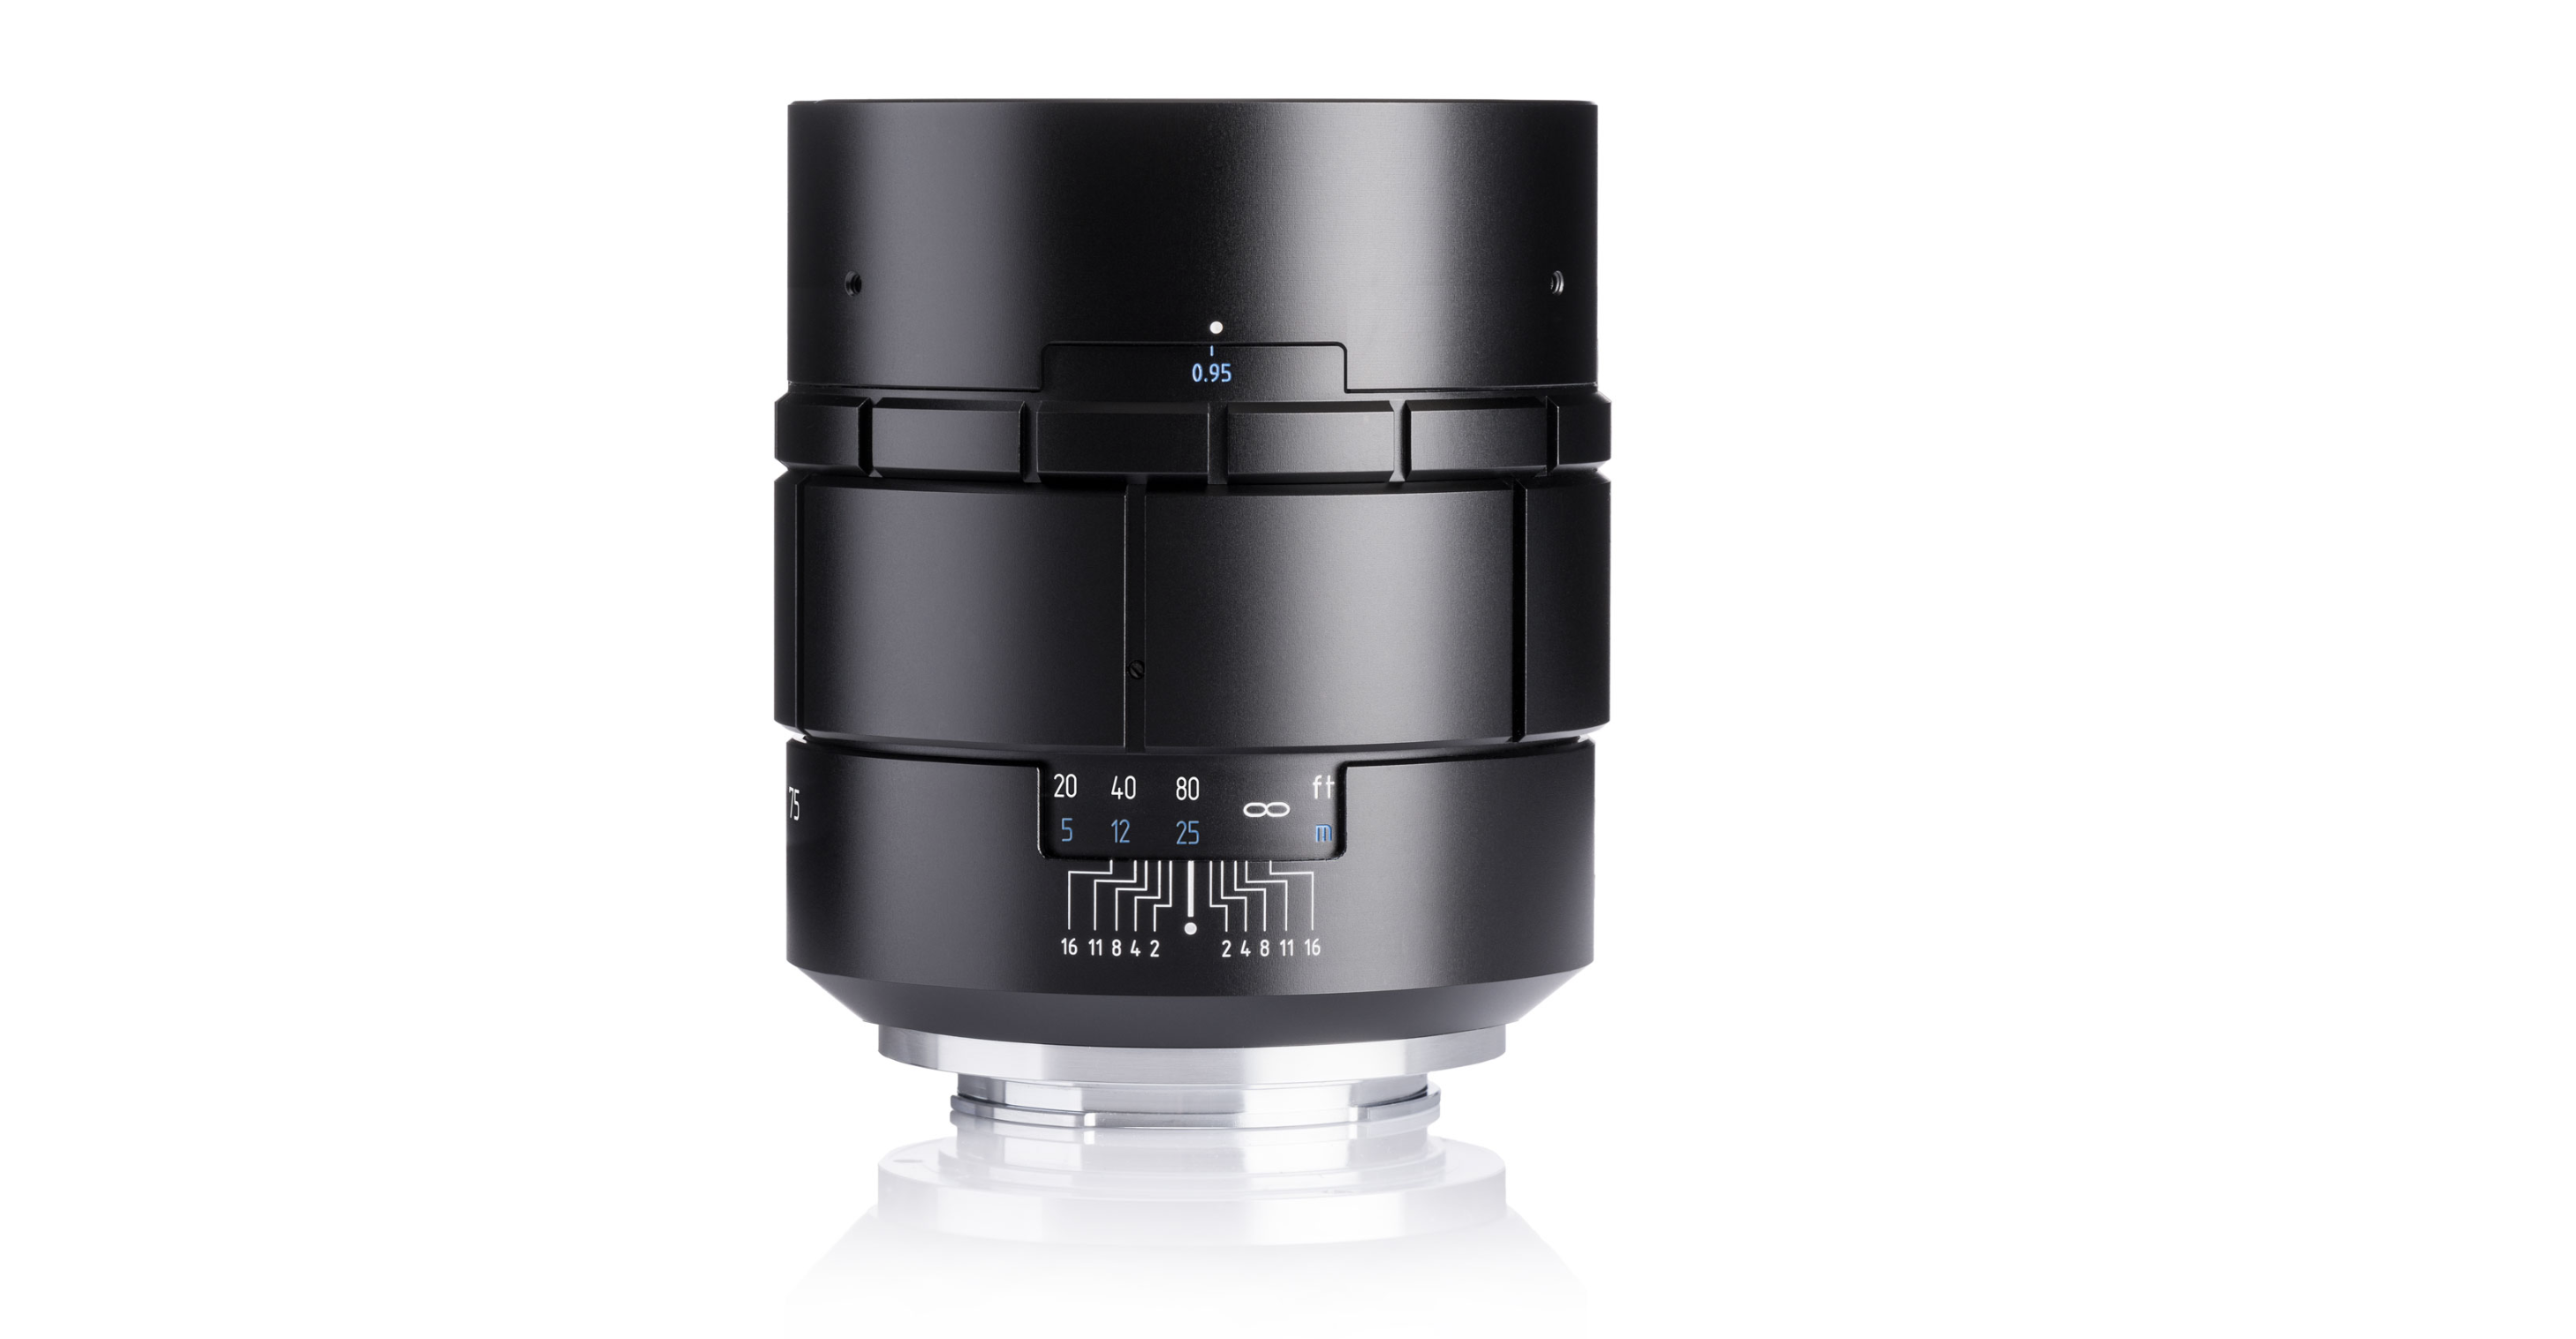 75mm F0.95 Nocturnus Lens | Meyer-Optik Goerlitz Goes After Leica In Speed & Price